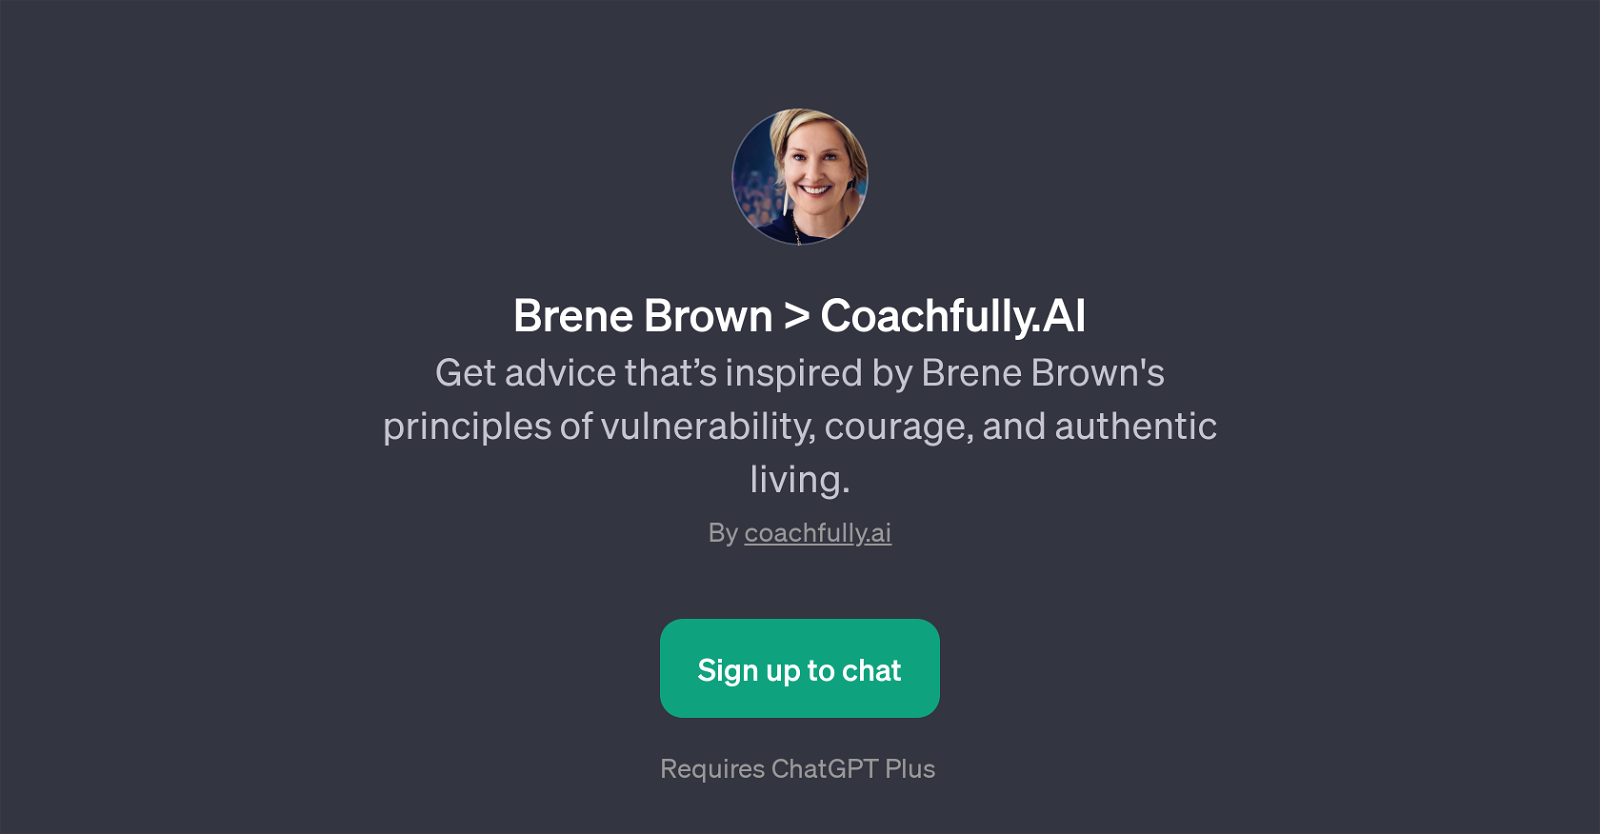 Brene Brown > Coachfully.AI website